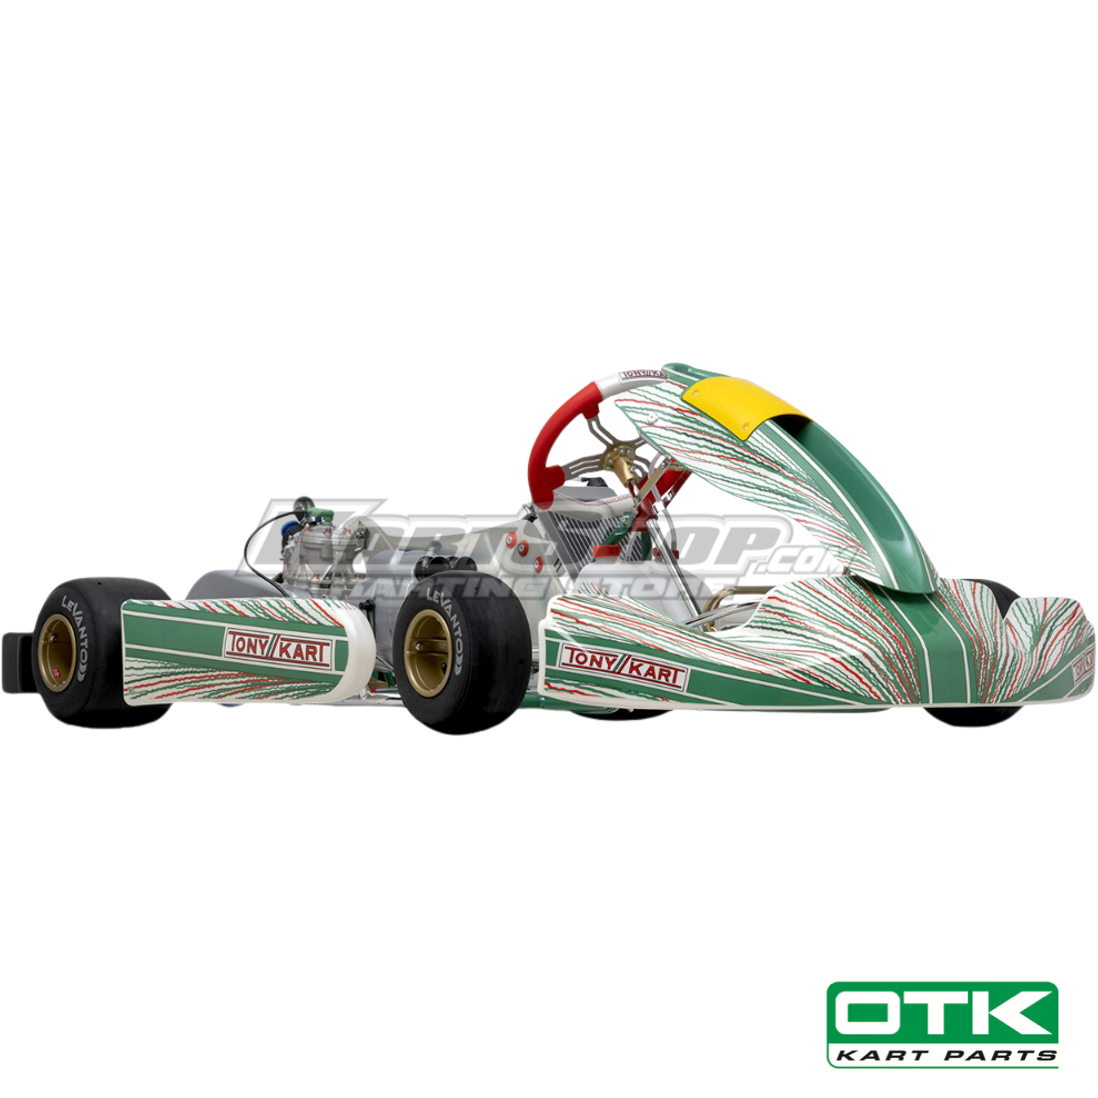 Tonykart Racer 401RR, DD2, BSS/VO